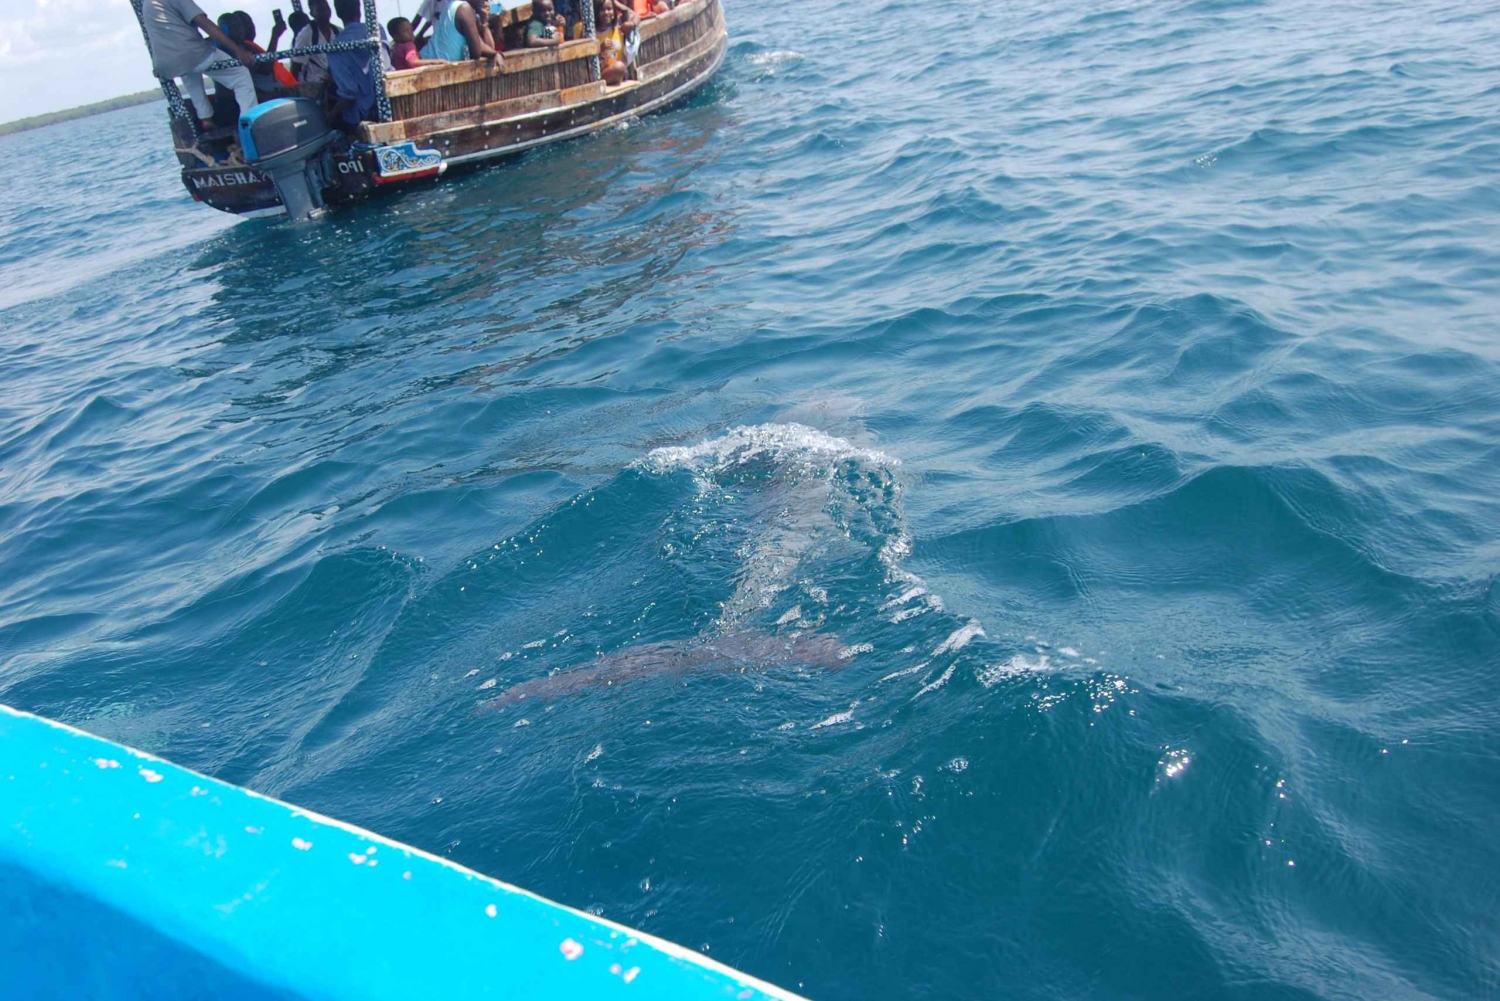 Wasini Dolphin 🐬 Tour from Diani Beach / Mombasa